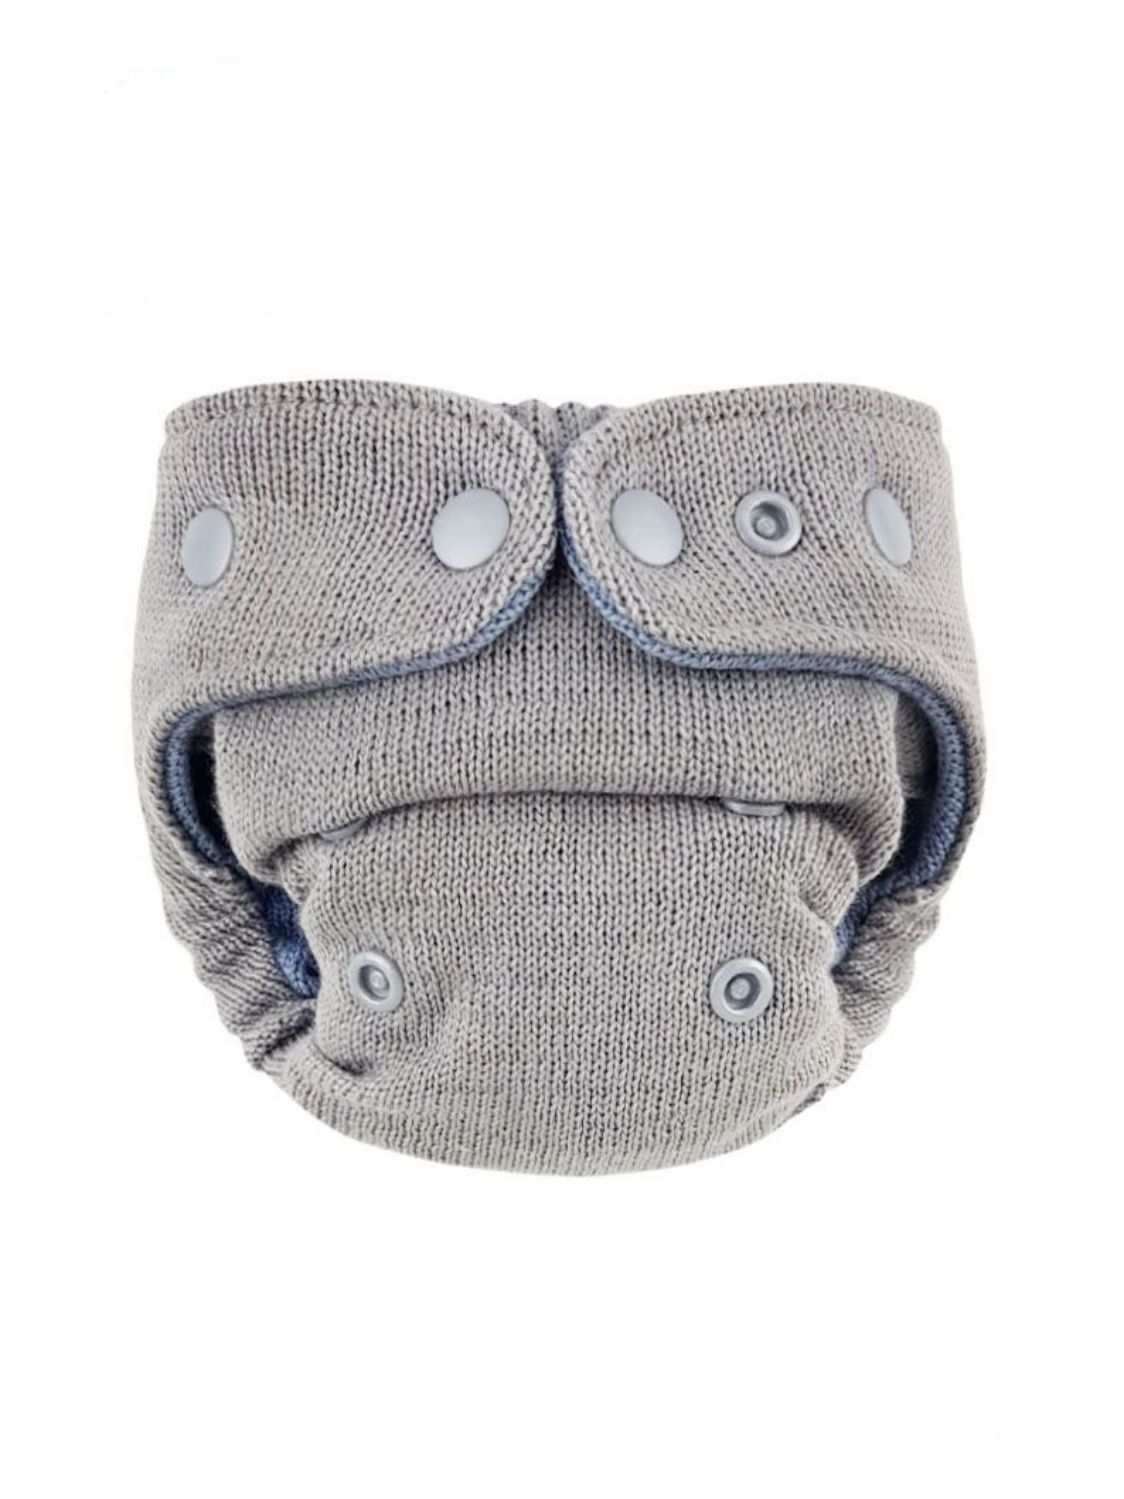 Magabi Knitted Newborn Wool Cover